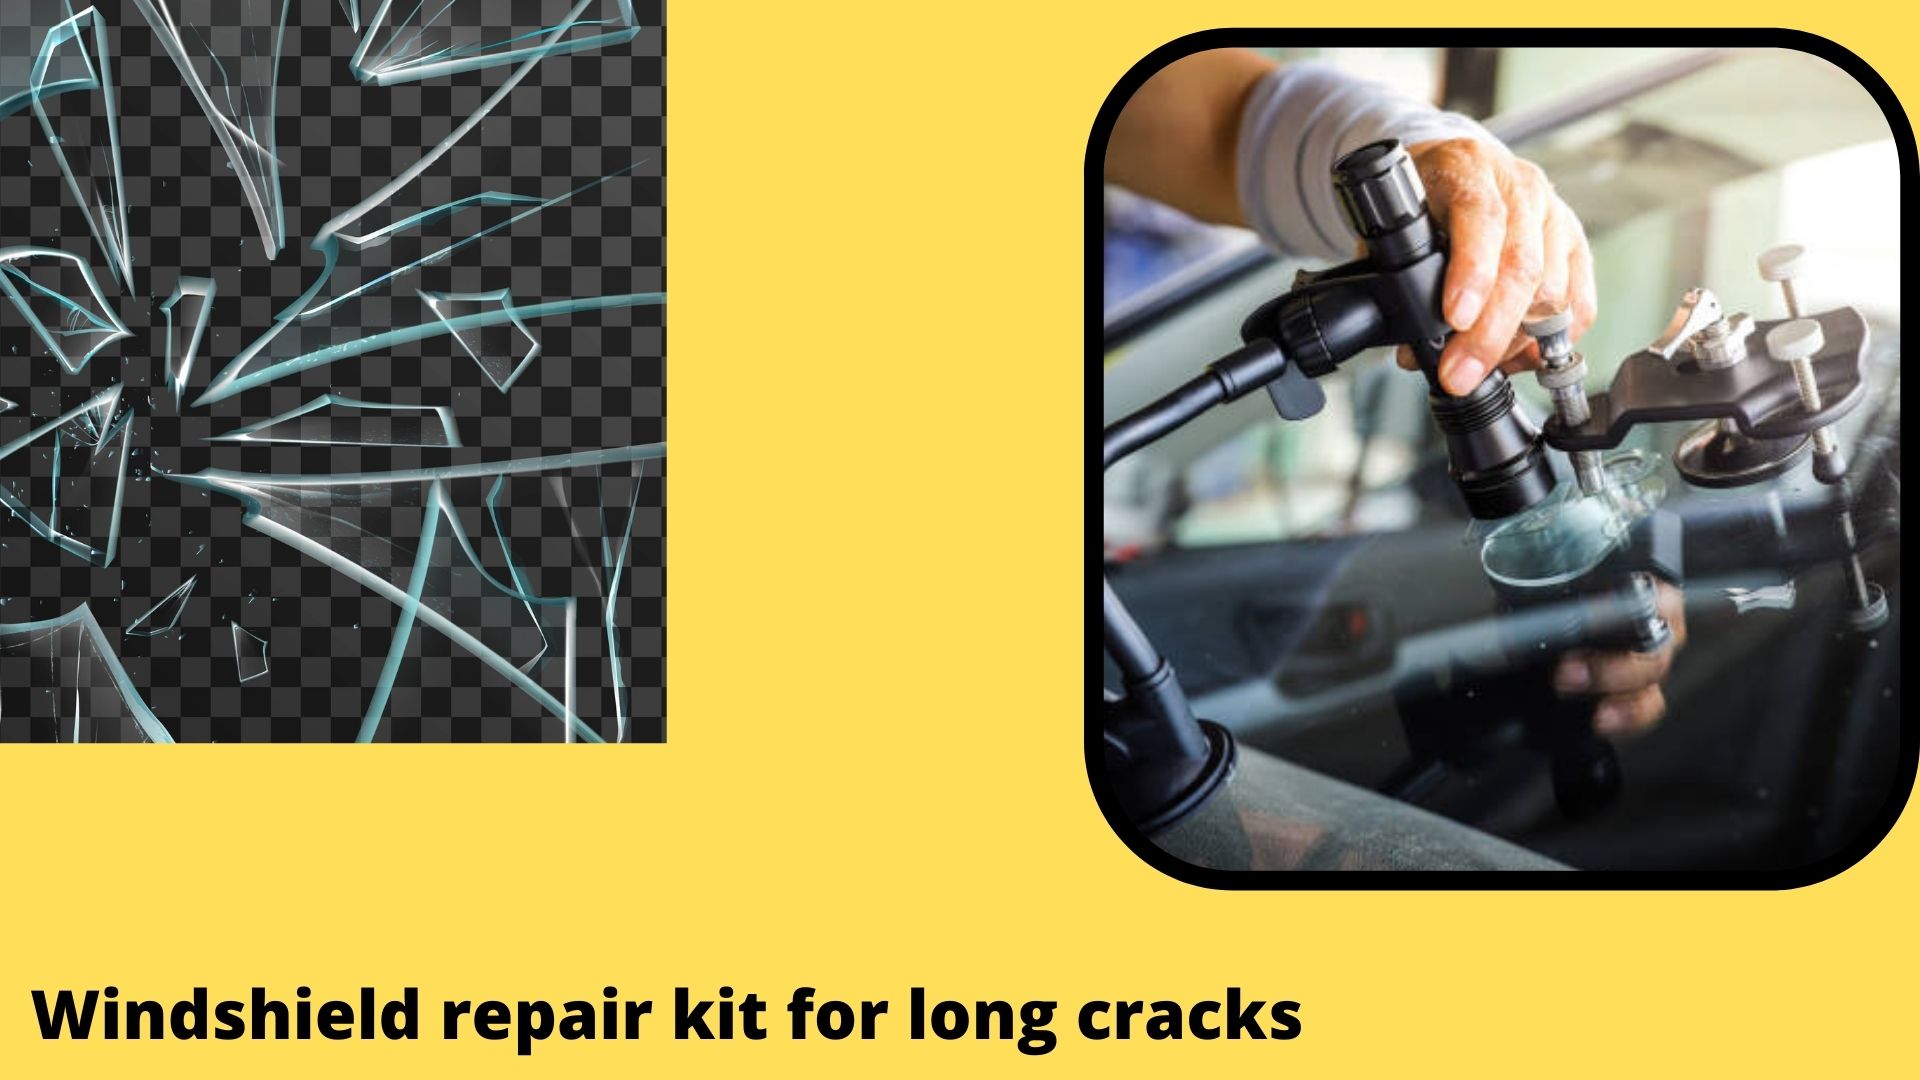 Windshield repair kit for long cracks